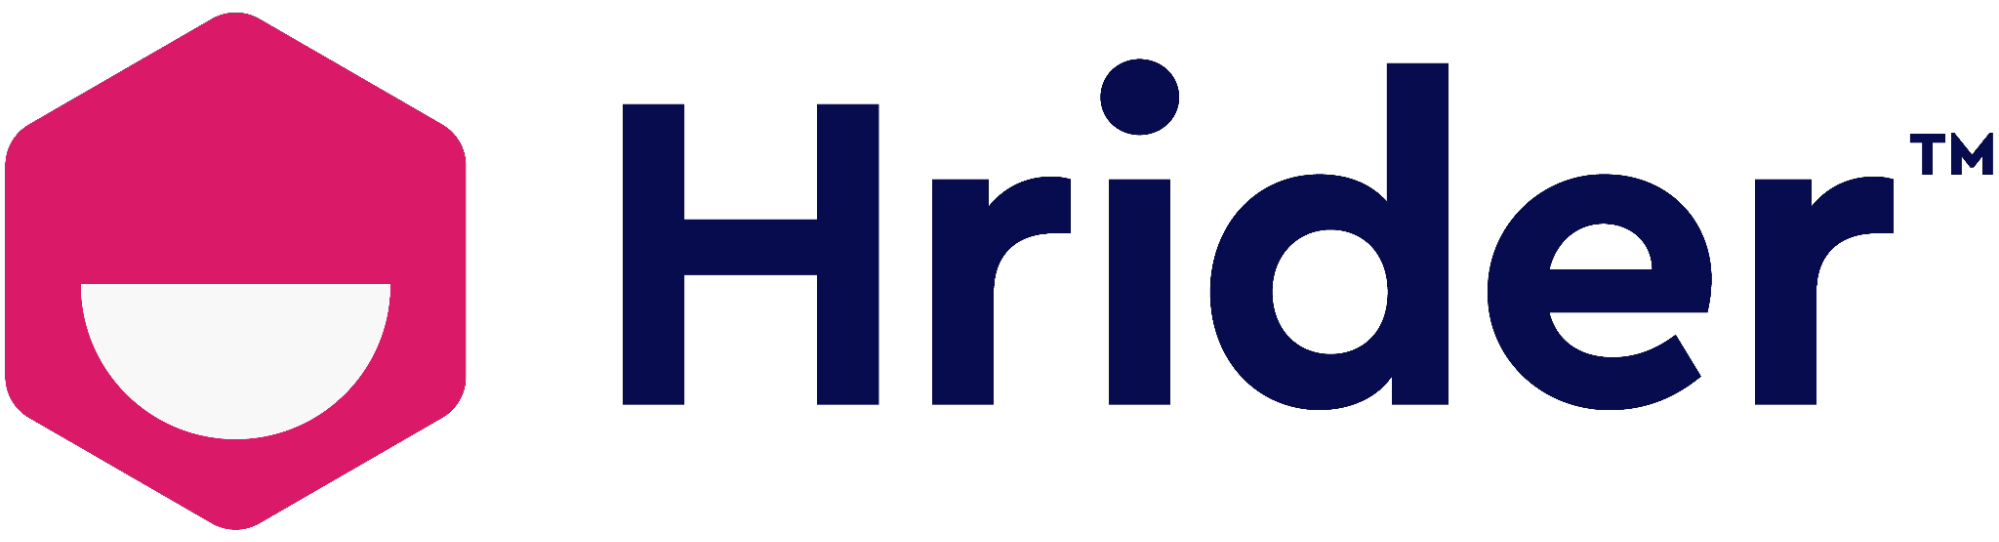 Hrider logo